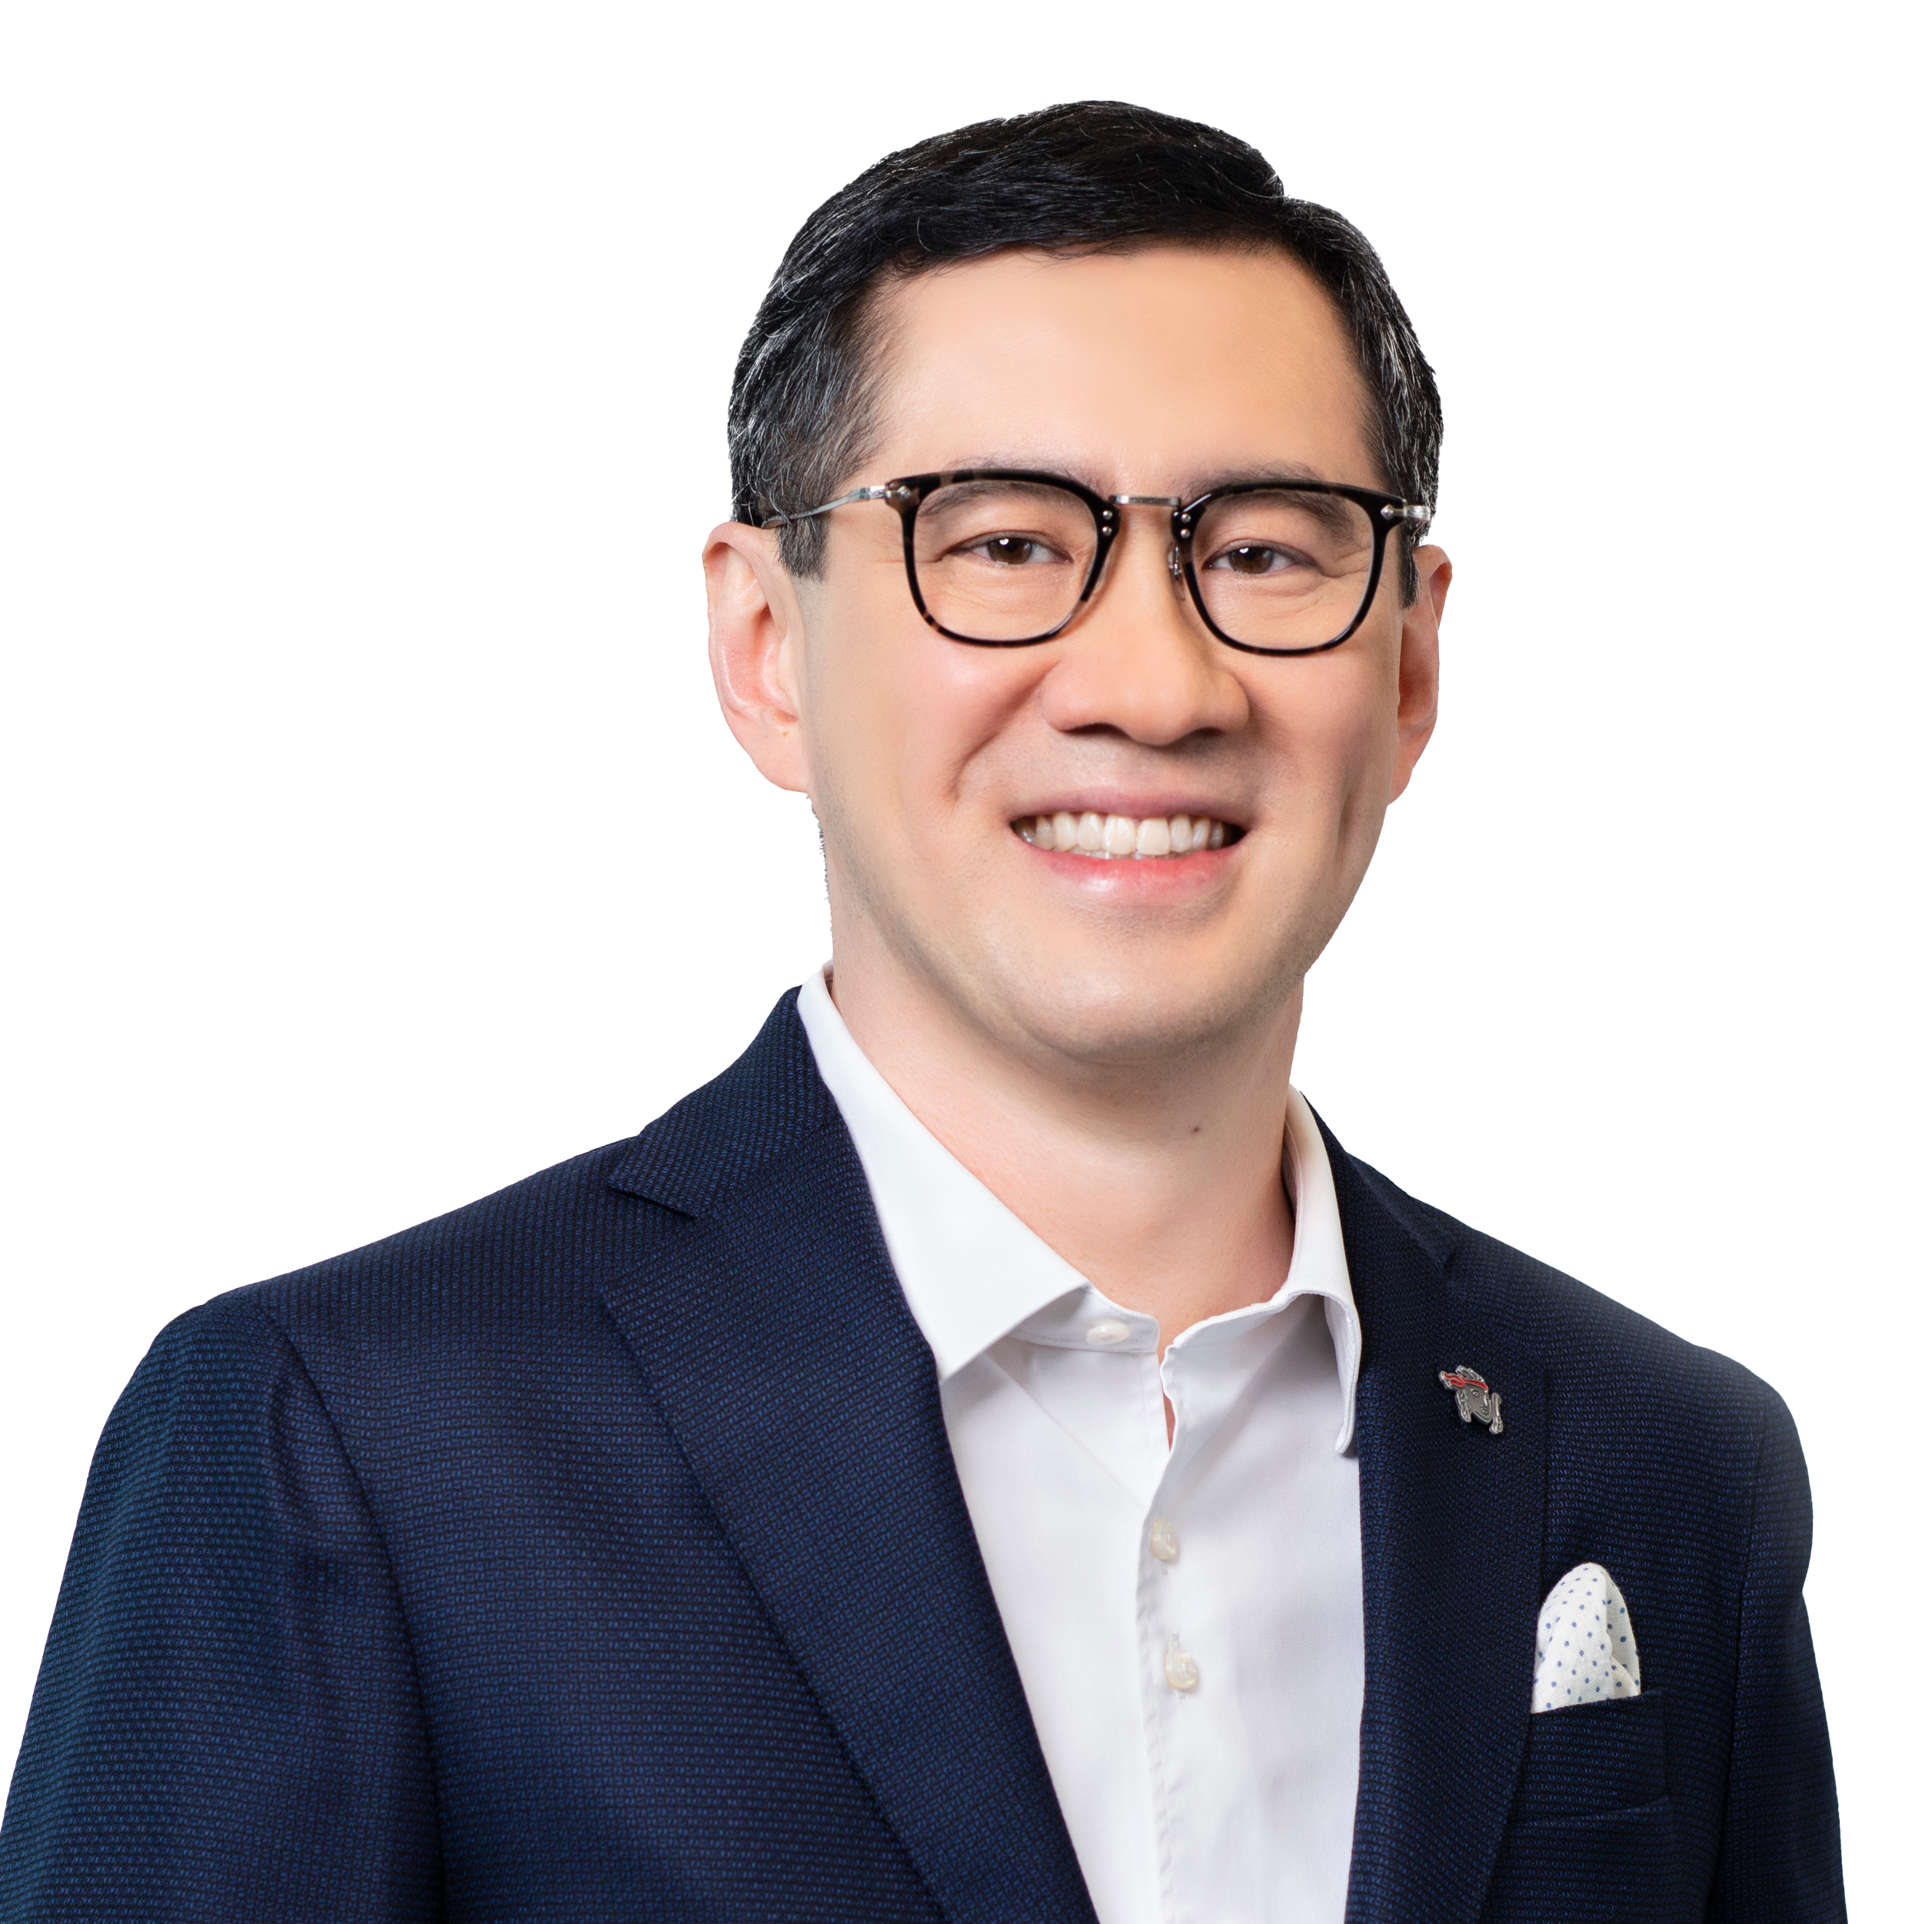 Dennis Tan - Council member